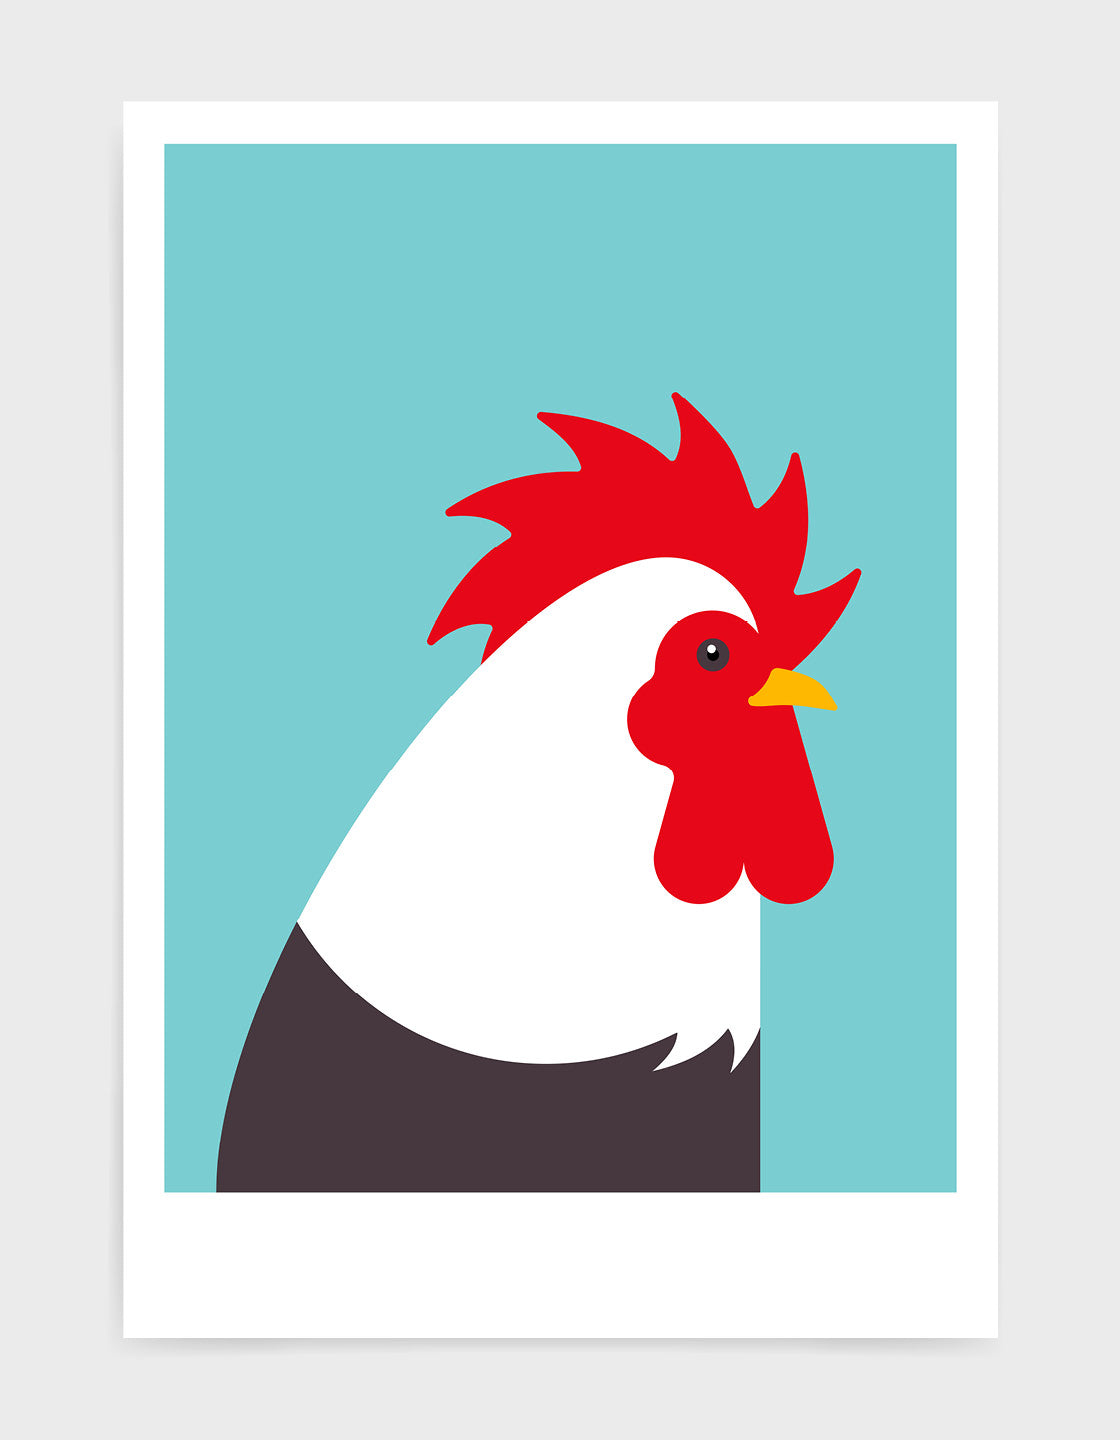 Modern cockerel / chicken illustration against a aqua blue background